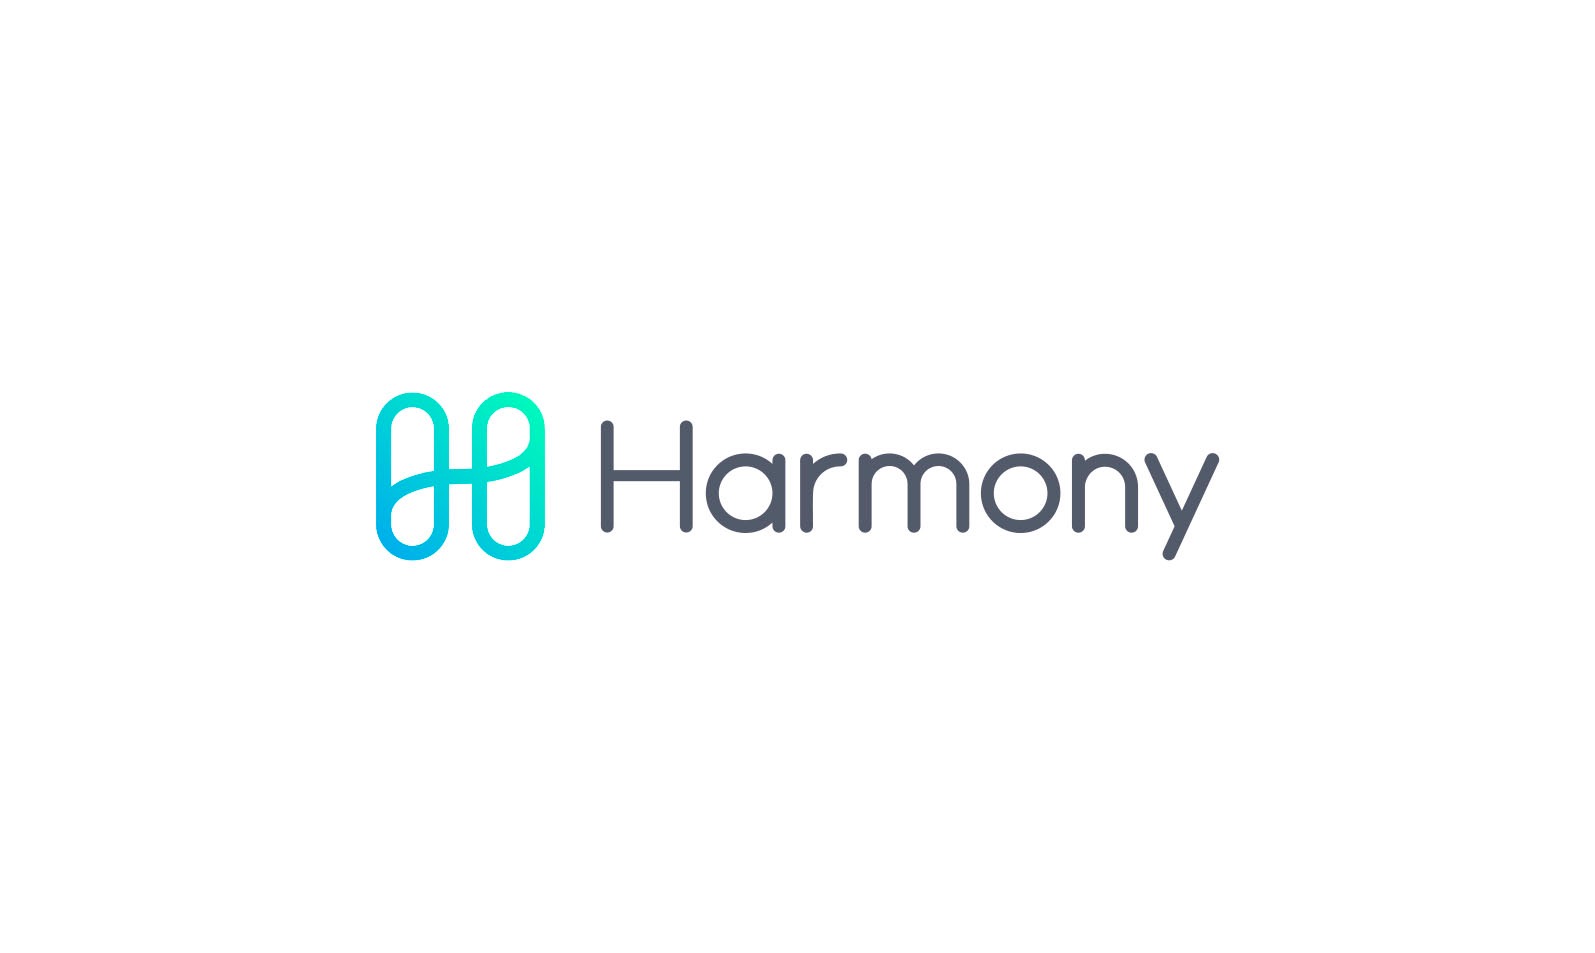 P1 harmony killin it. Harmony one. Harmony криптовалюта. Блокчейн Хармони. Harmony логотип.